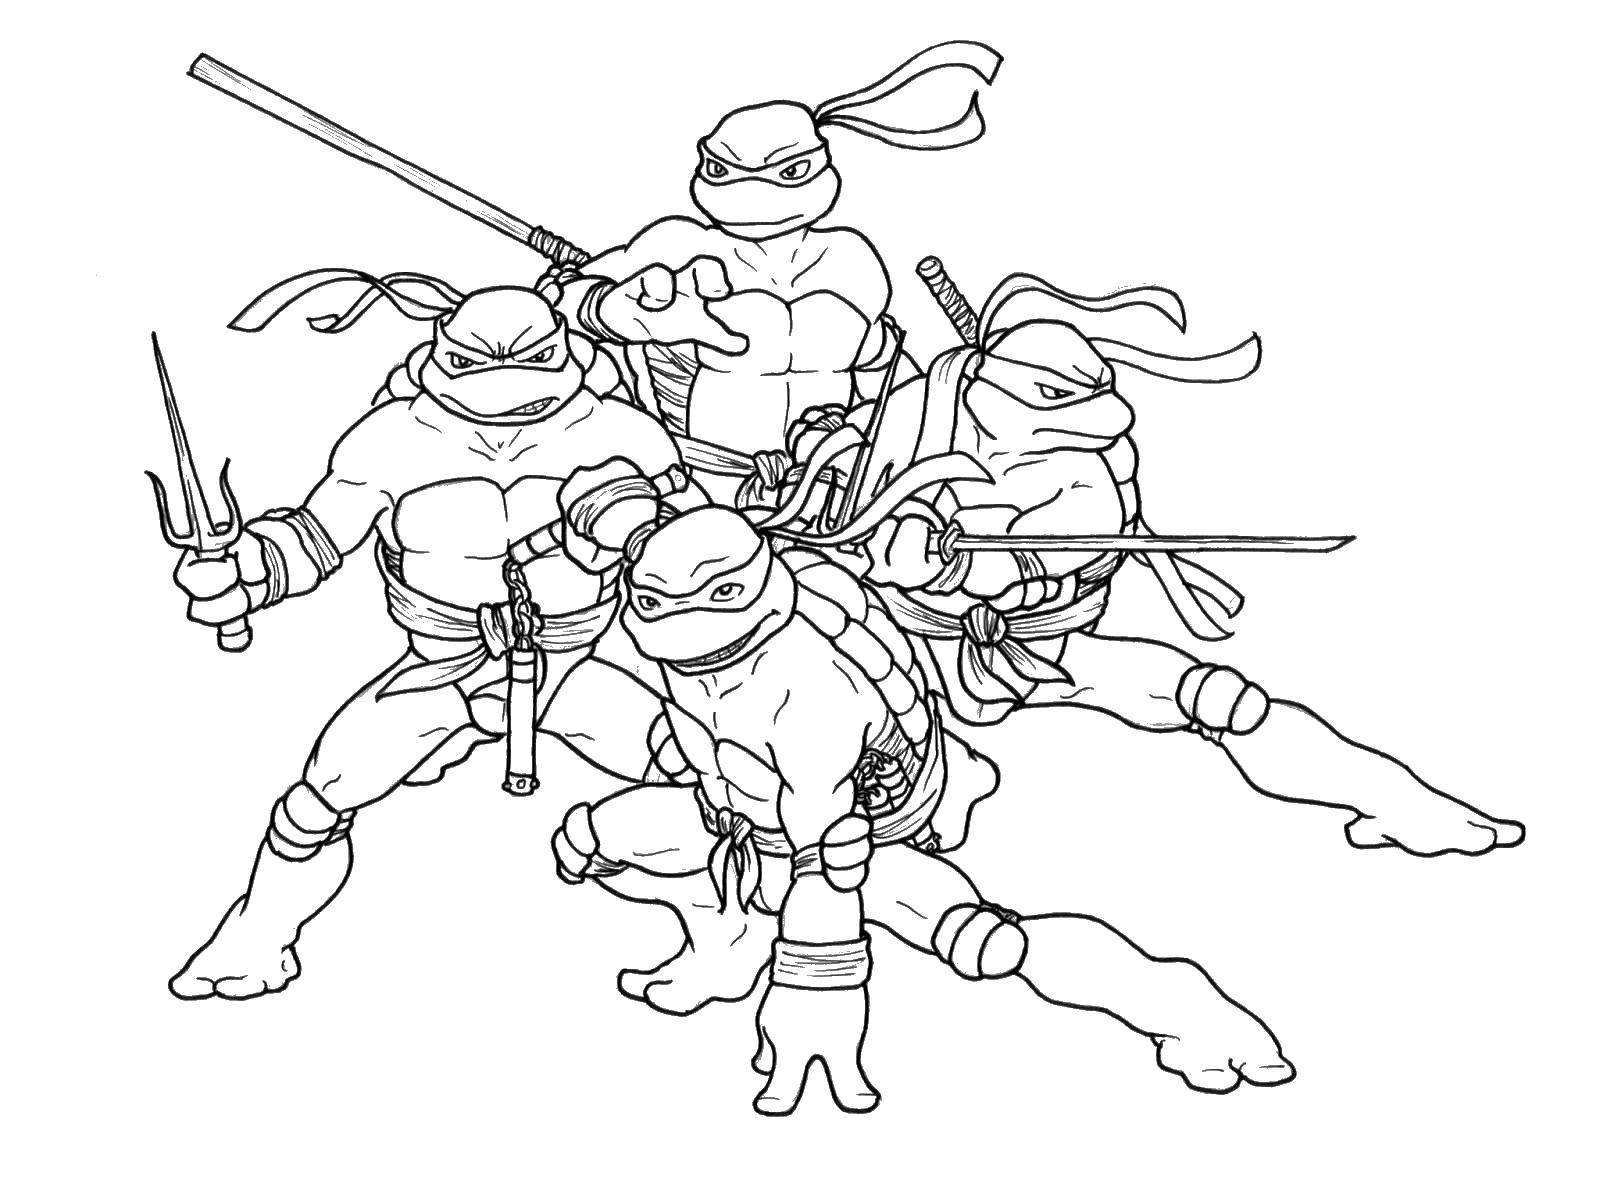 Coloring Teenage mutant ninja turtles. Category teenage mutant ninja turtles. Tags:  Comics, Teenage Mutant Ninja Turtles.